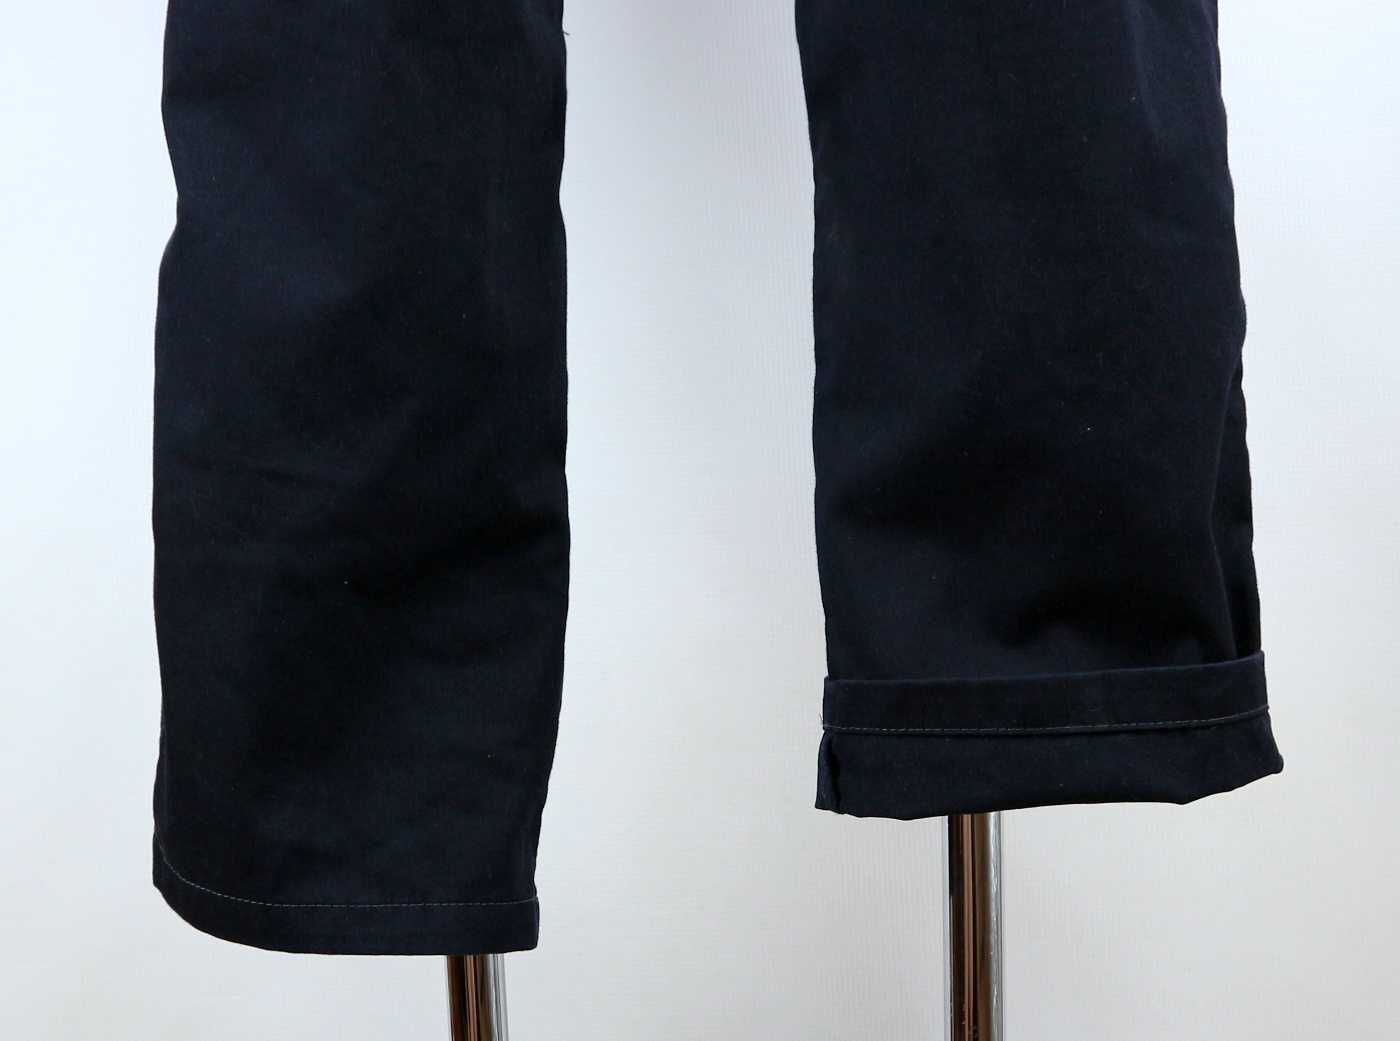 Bjornklader lekkie spodnie robocze 48 (M)